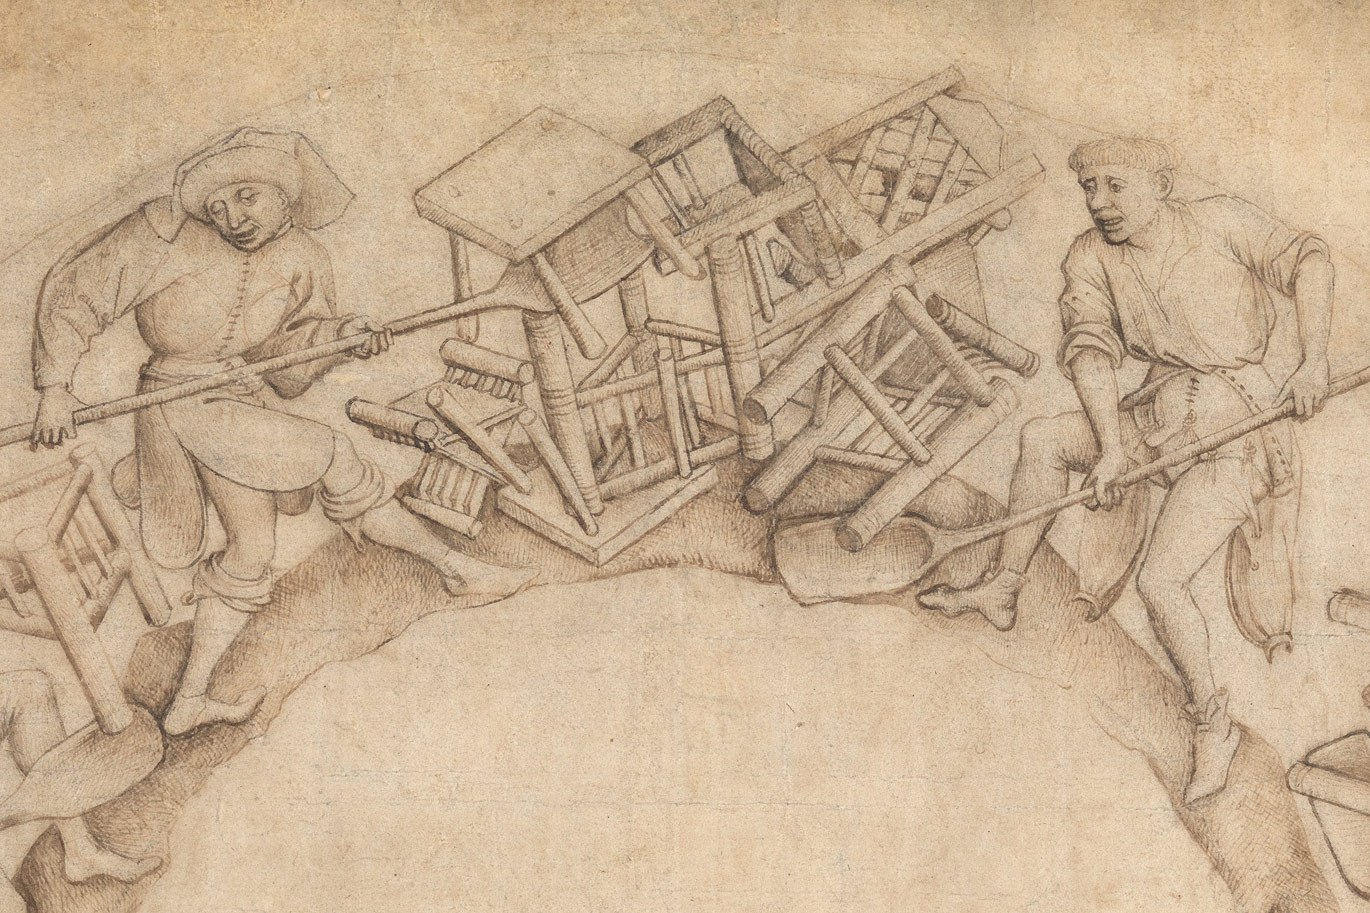 Men Shoveling Chairs by Circle of Rogier van der Weyden